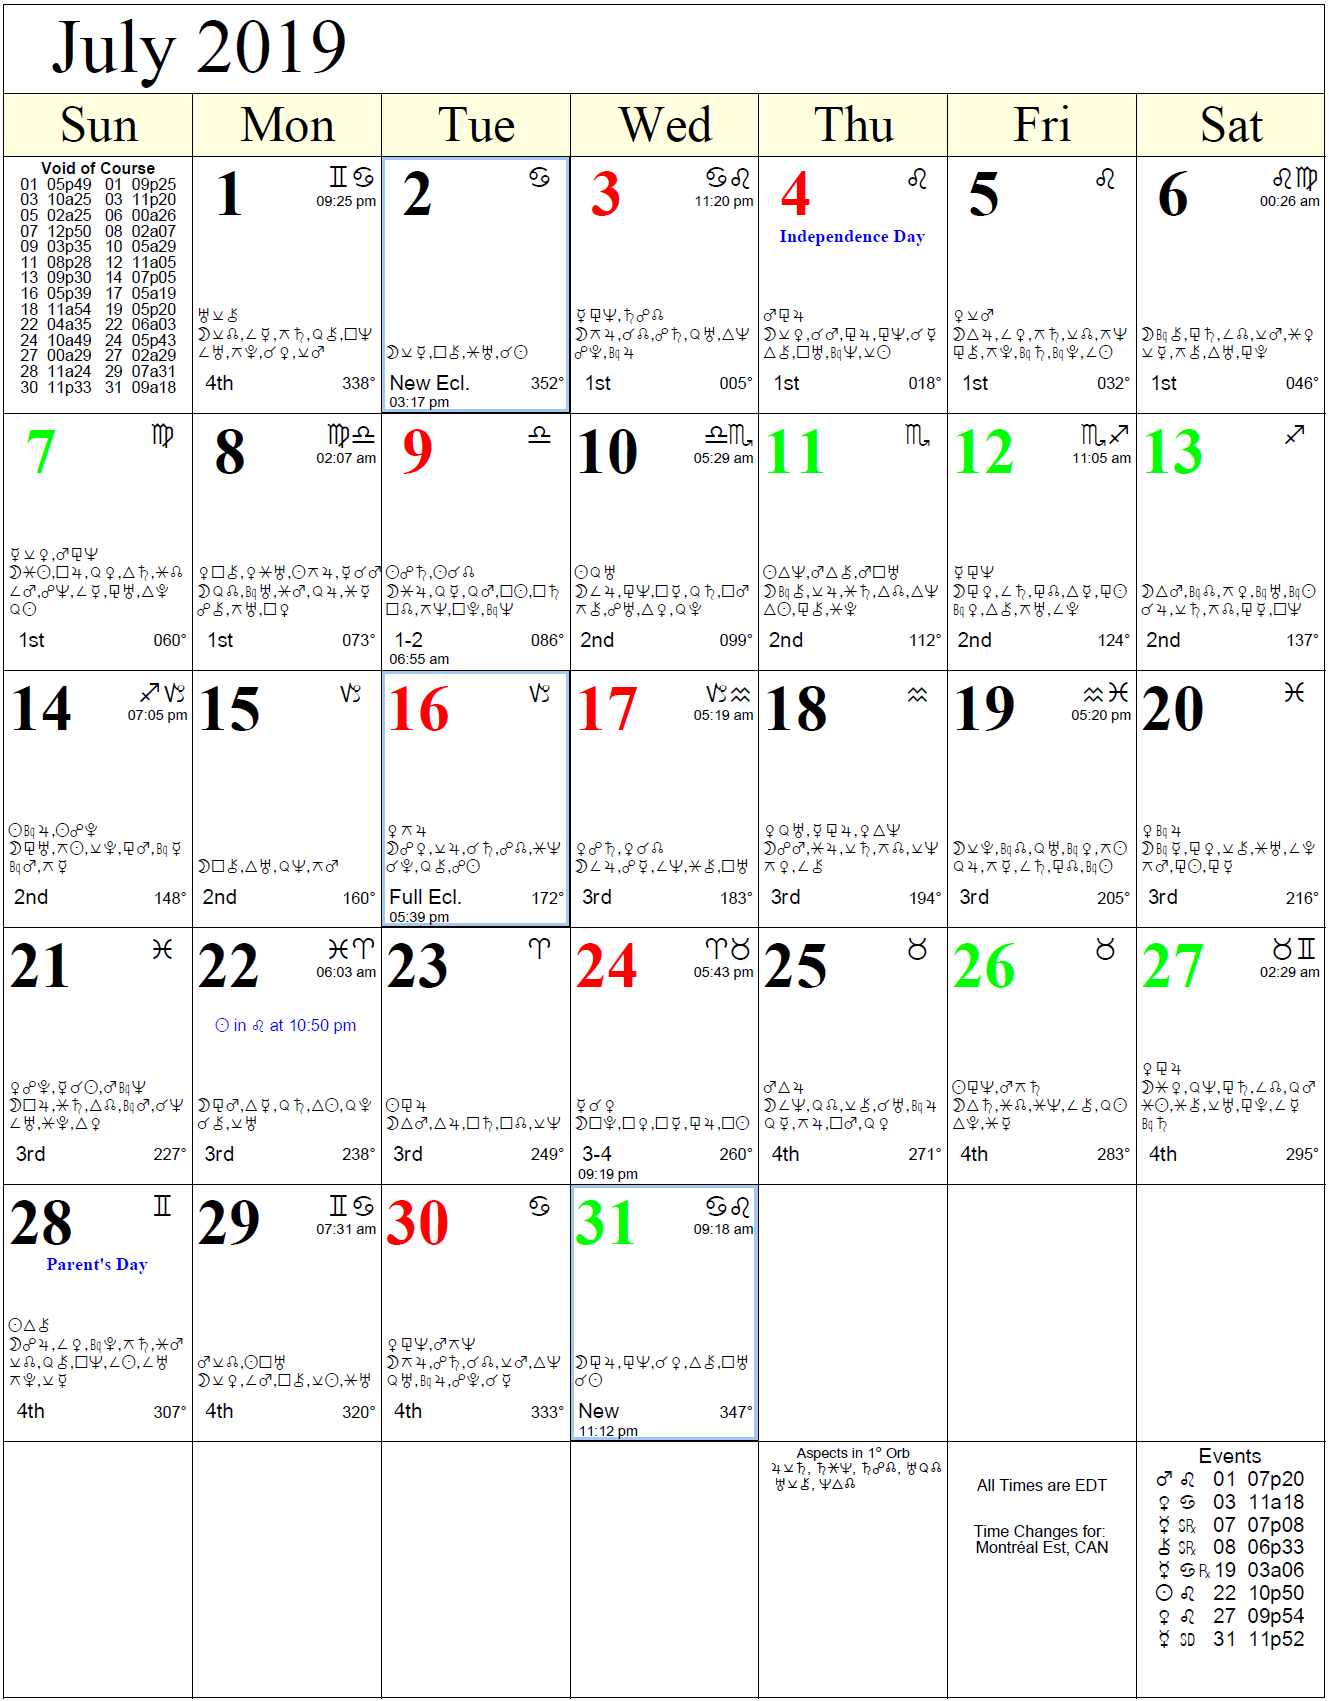 Zodiac Birth Month Chart